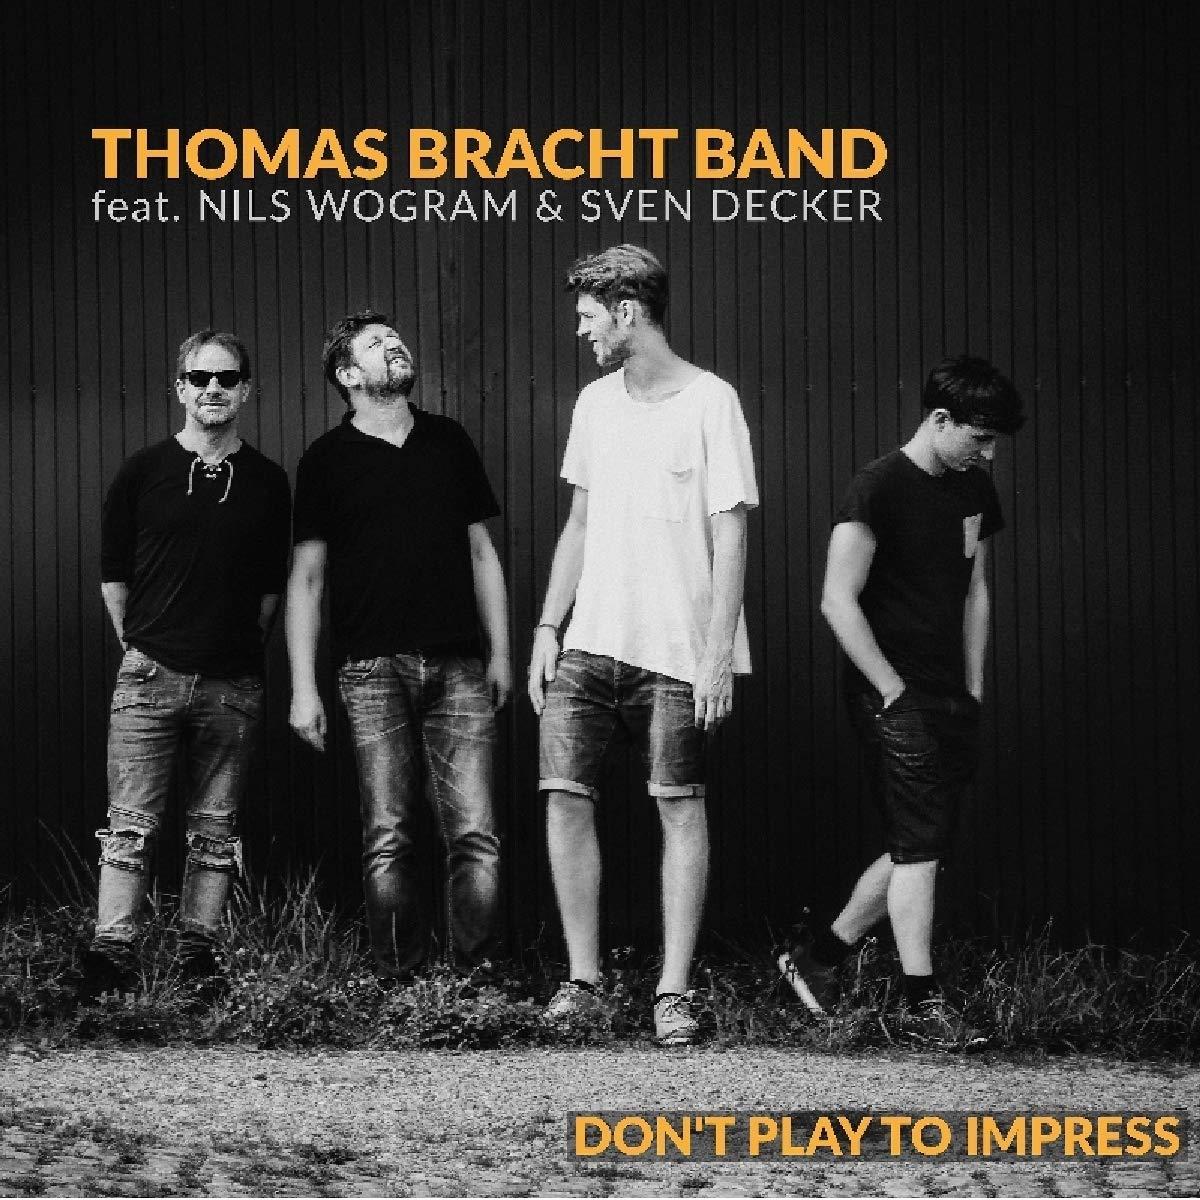 Bracht Band, Thomas - Don't play to impress